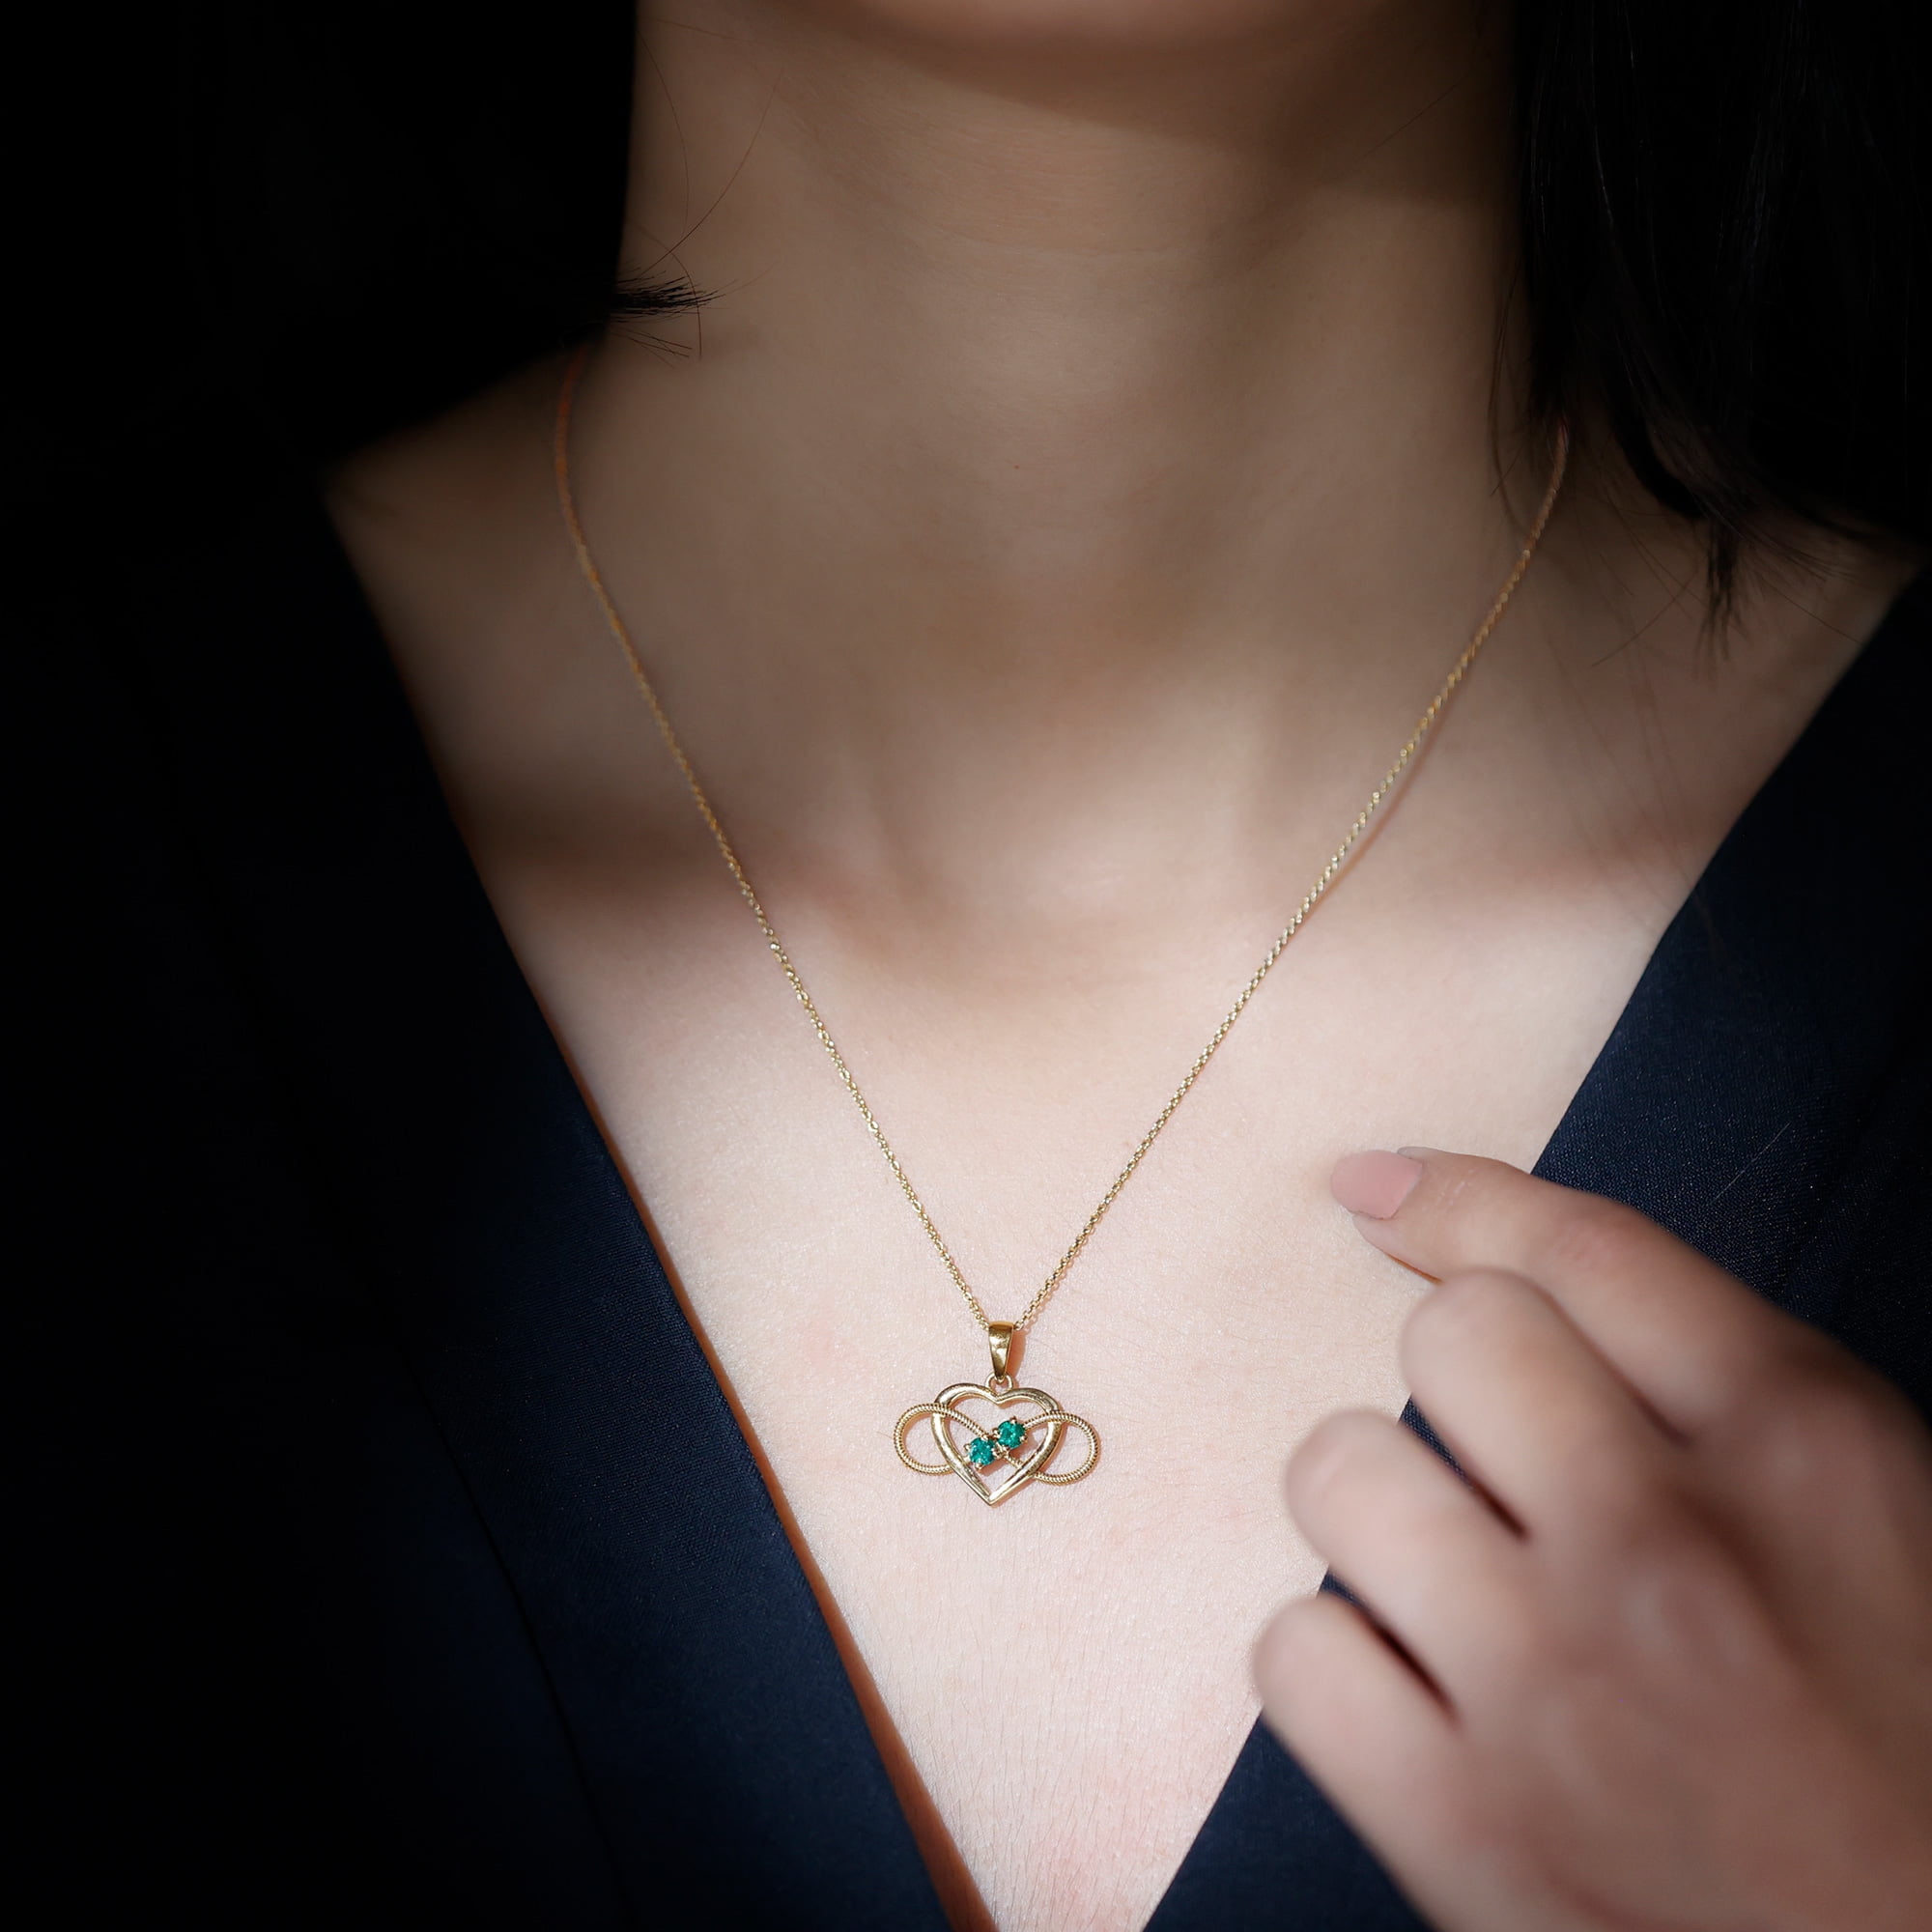 Infinity Stones Necklace - Shop on Pinterest